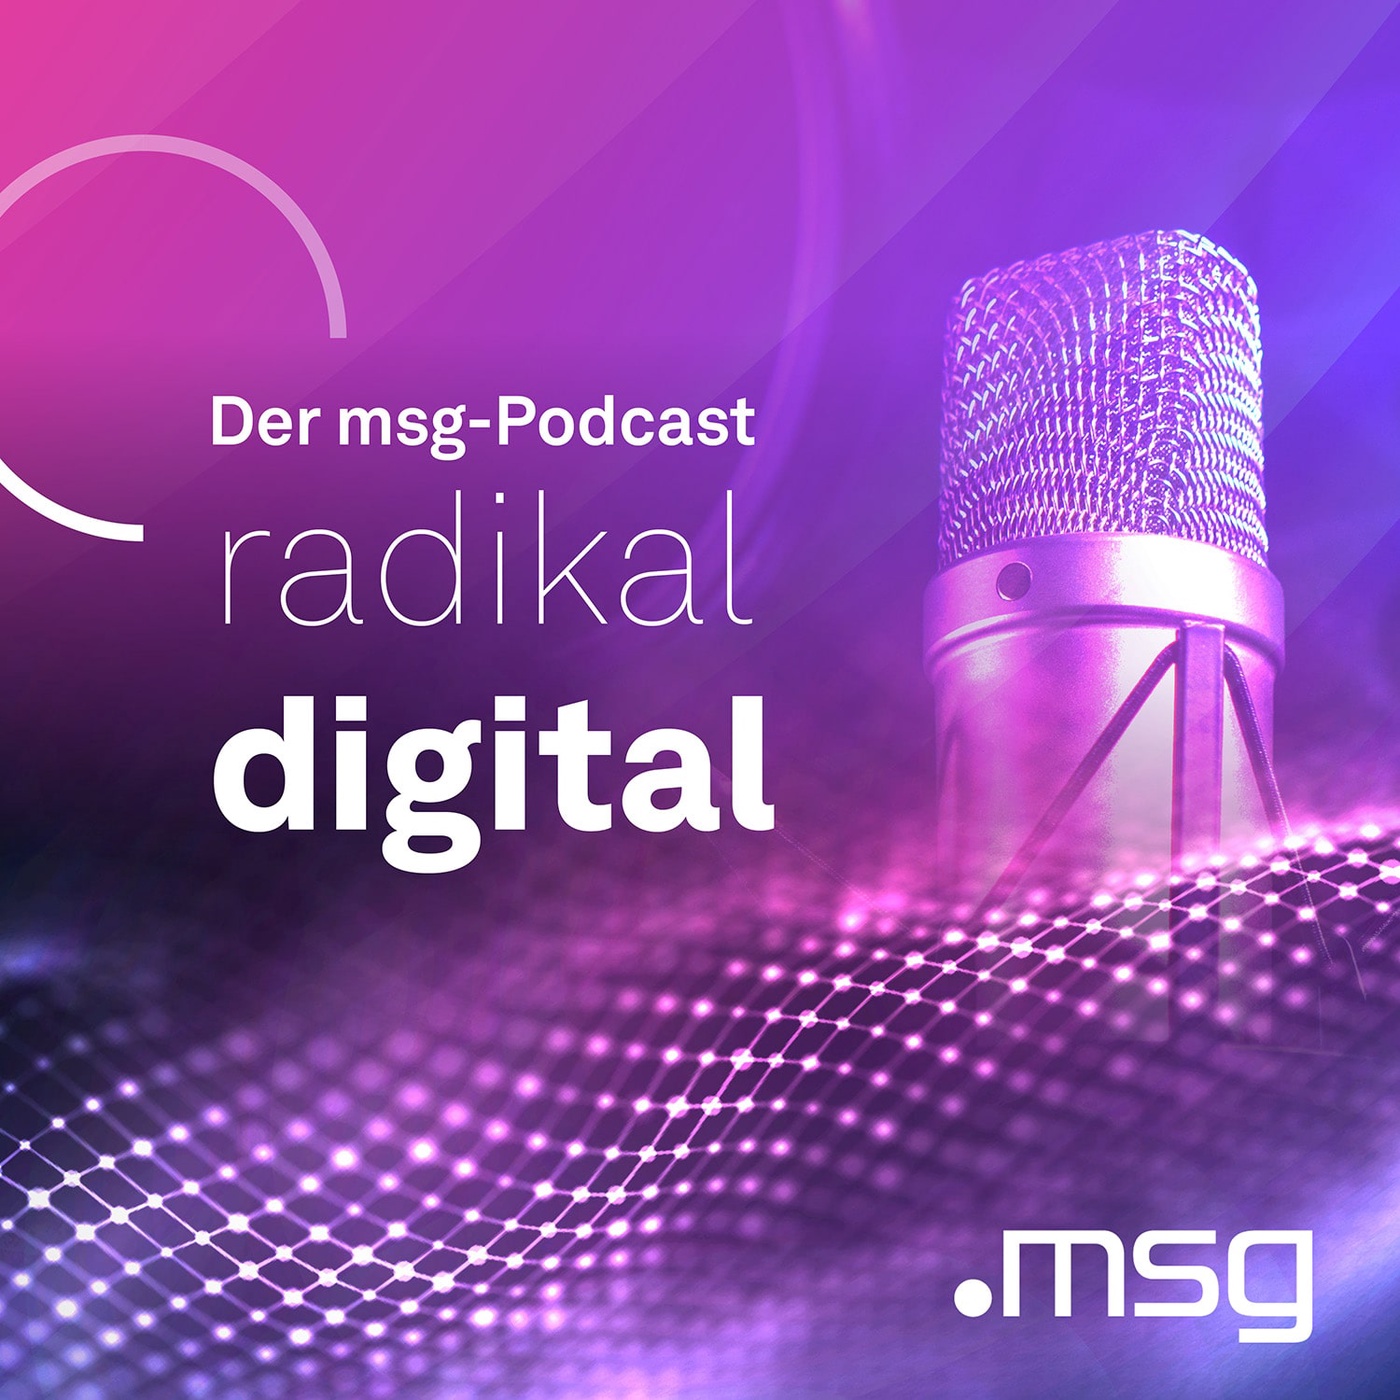 radikal digital – Der msg-Podcast